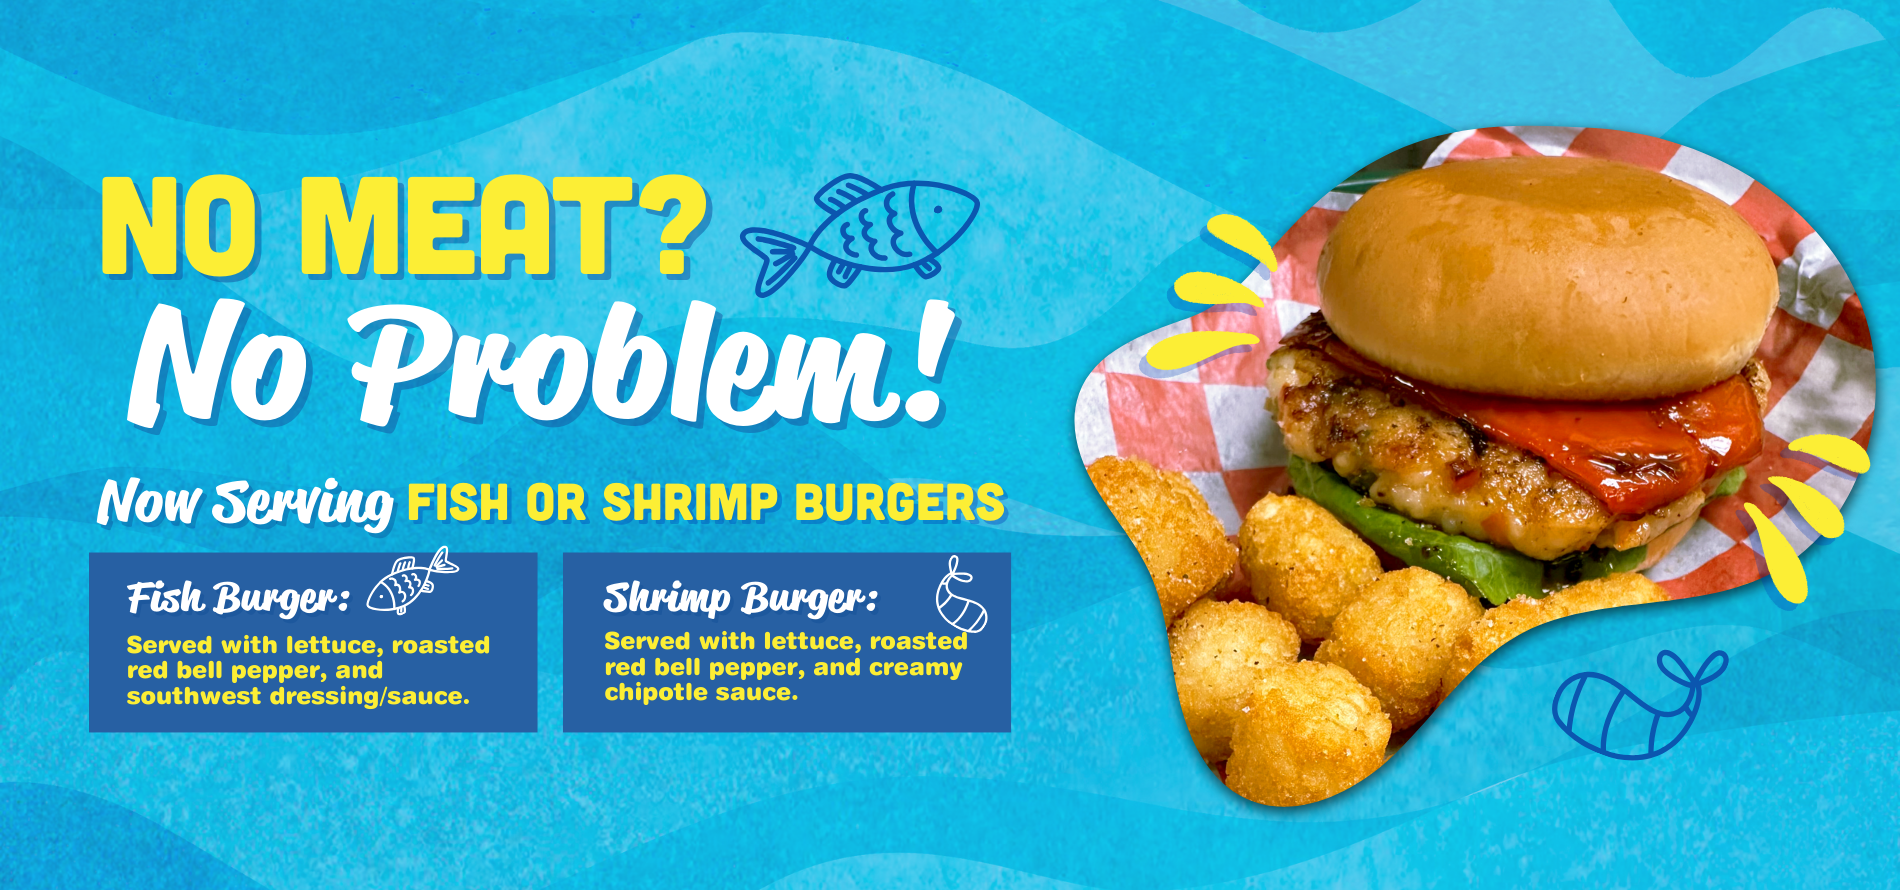 cj_fish-burger-promo_web-banner